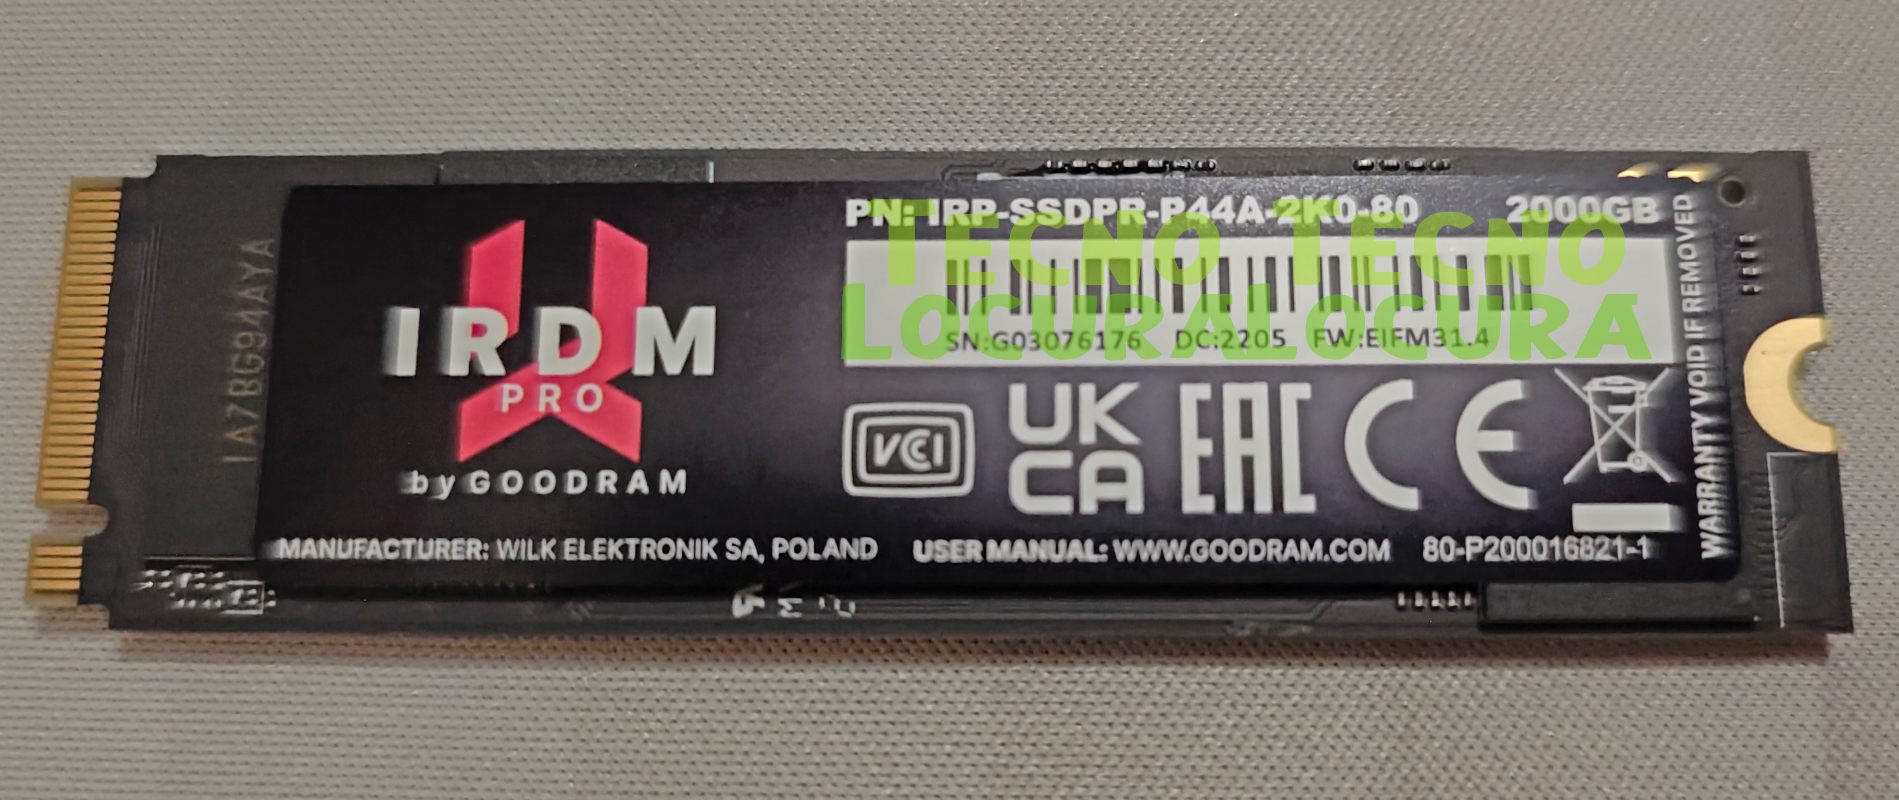 IRDM PRO 2TB M.2 SSD review TECNOLOCURA